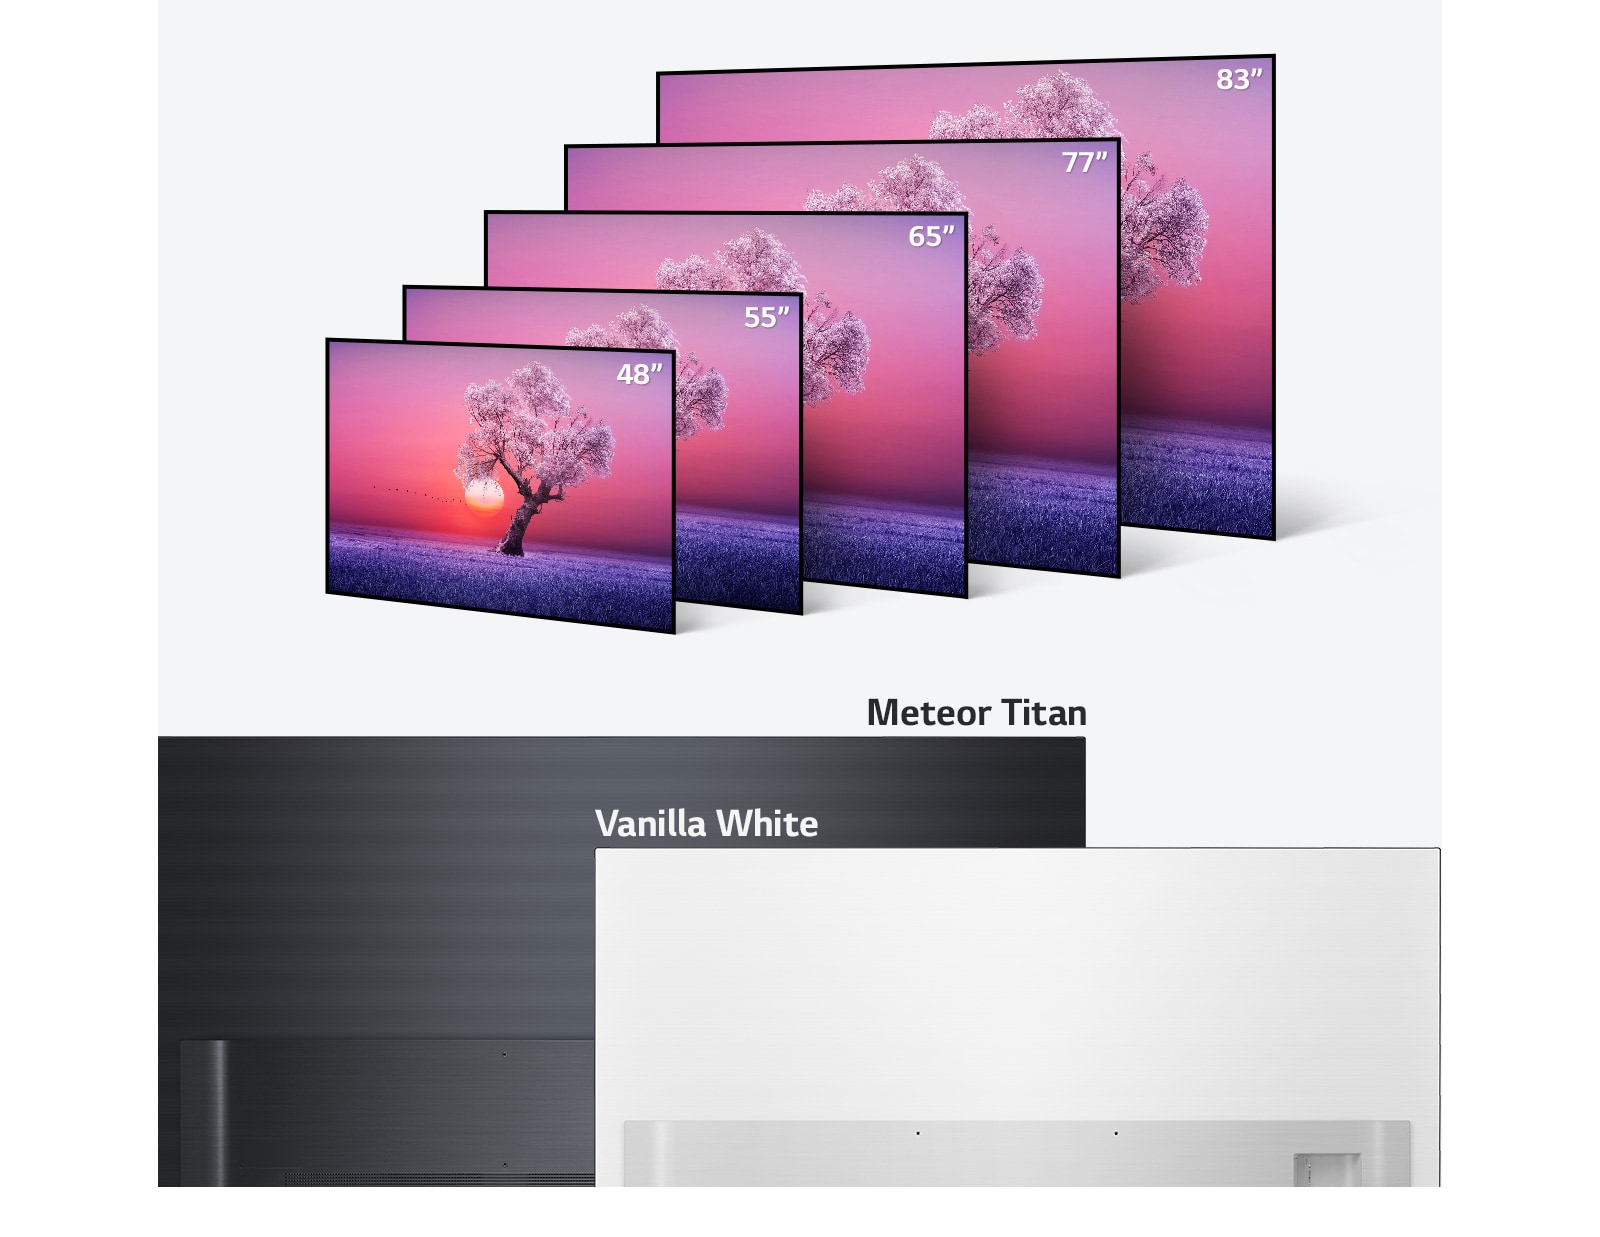 Linia de televizoare LG OLED in diferite dimensiuni de la 48 inci la 83 inci si culori in negru deschis si alb vanilat